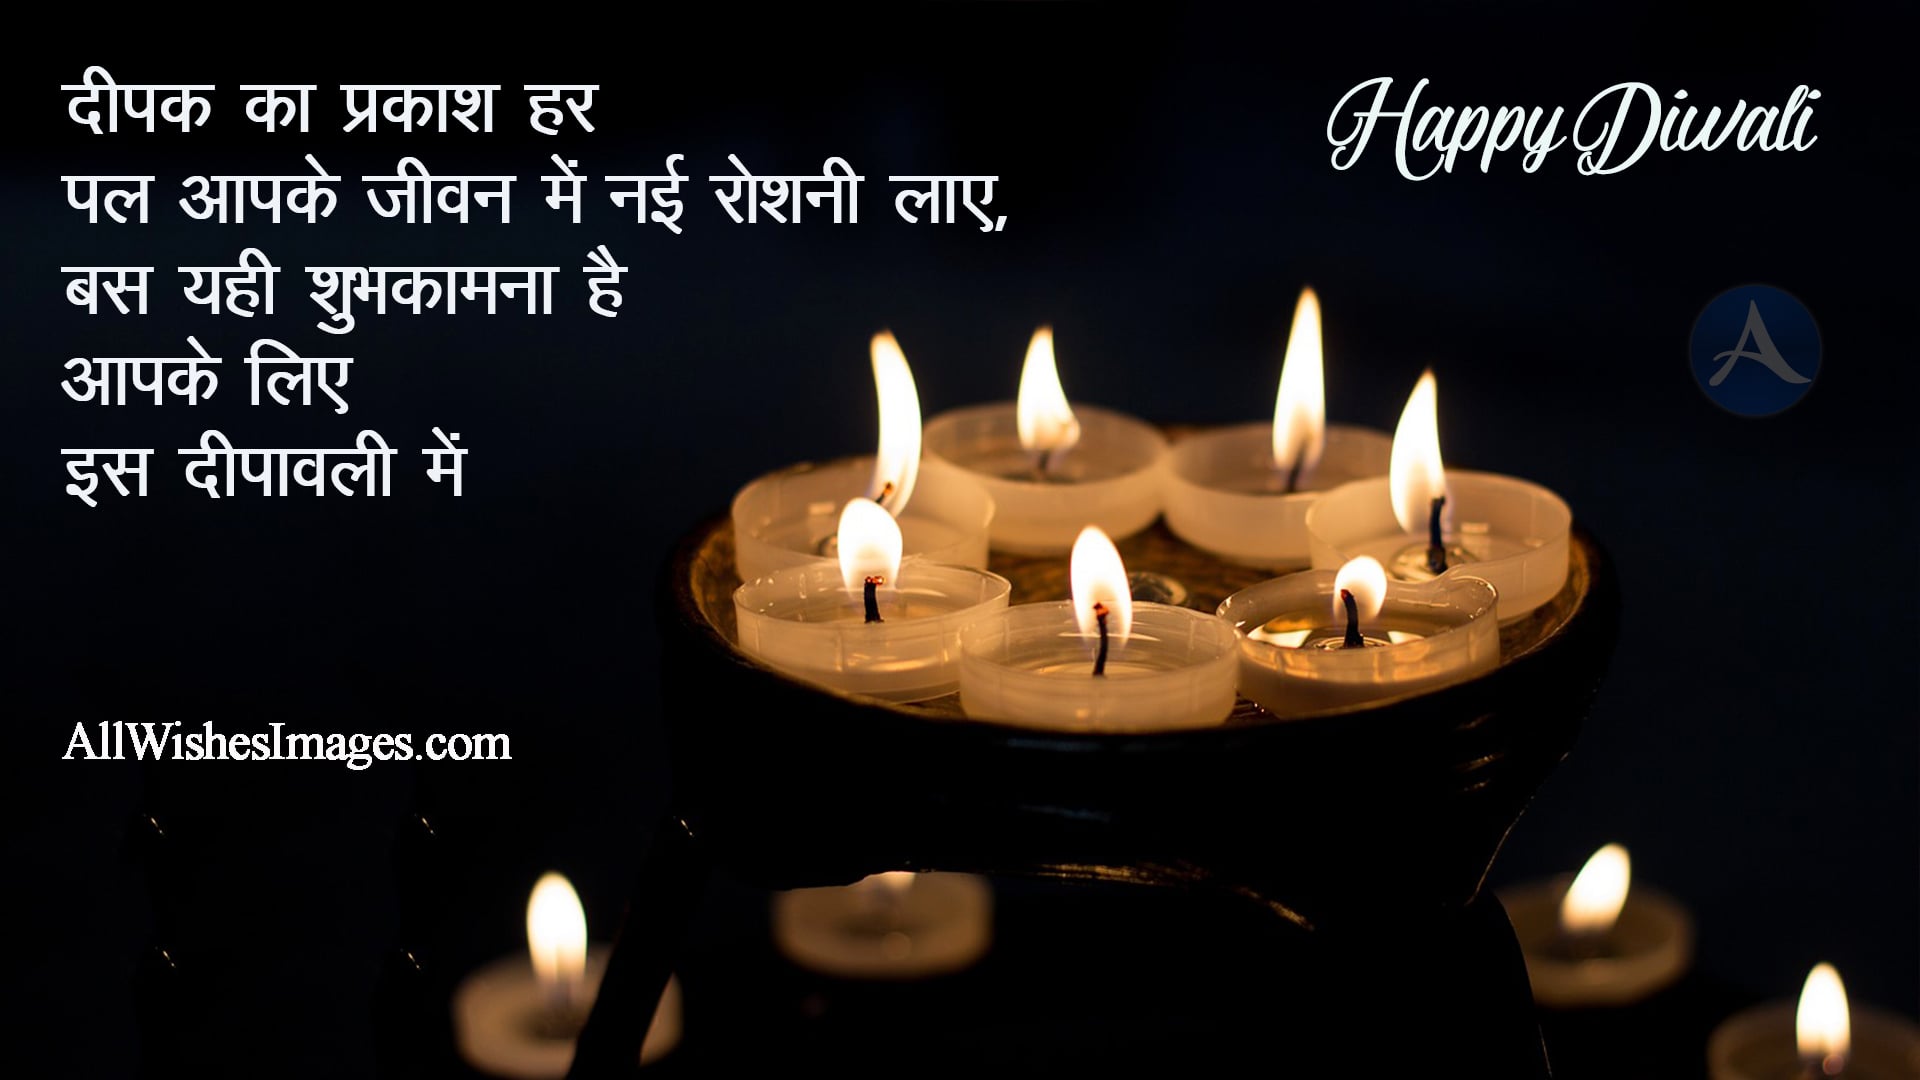 Happy Diwali Hindi Shayari Images - All Wishes Images - Images for WhatsApp